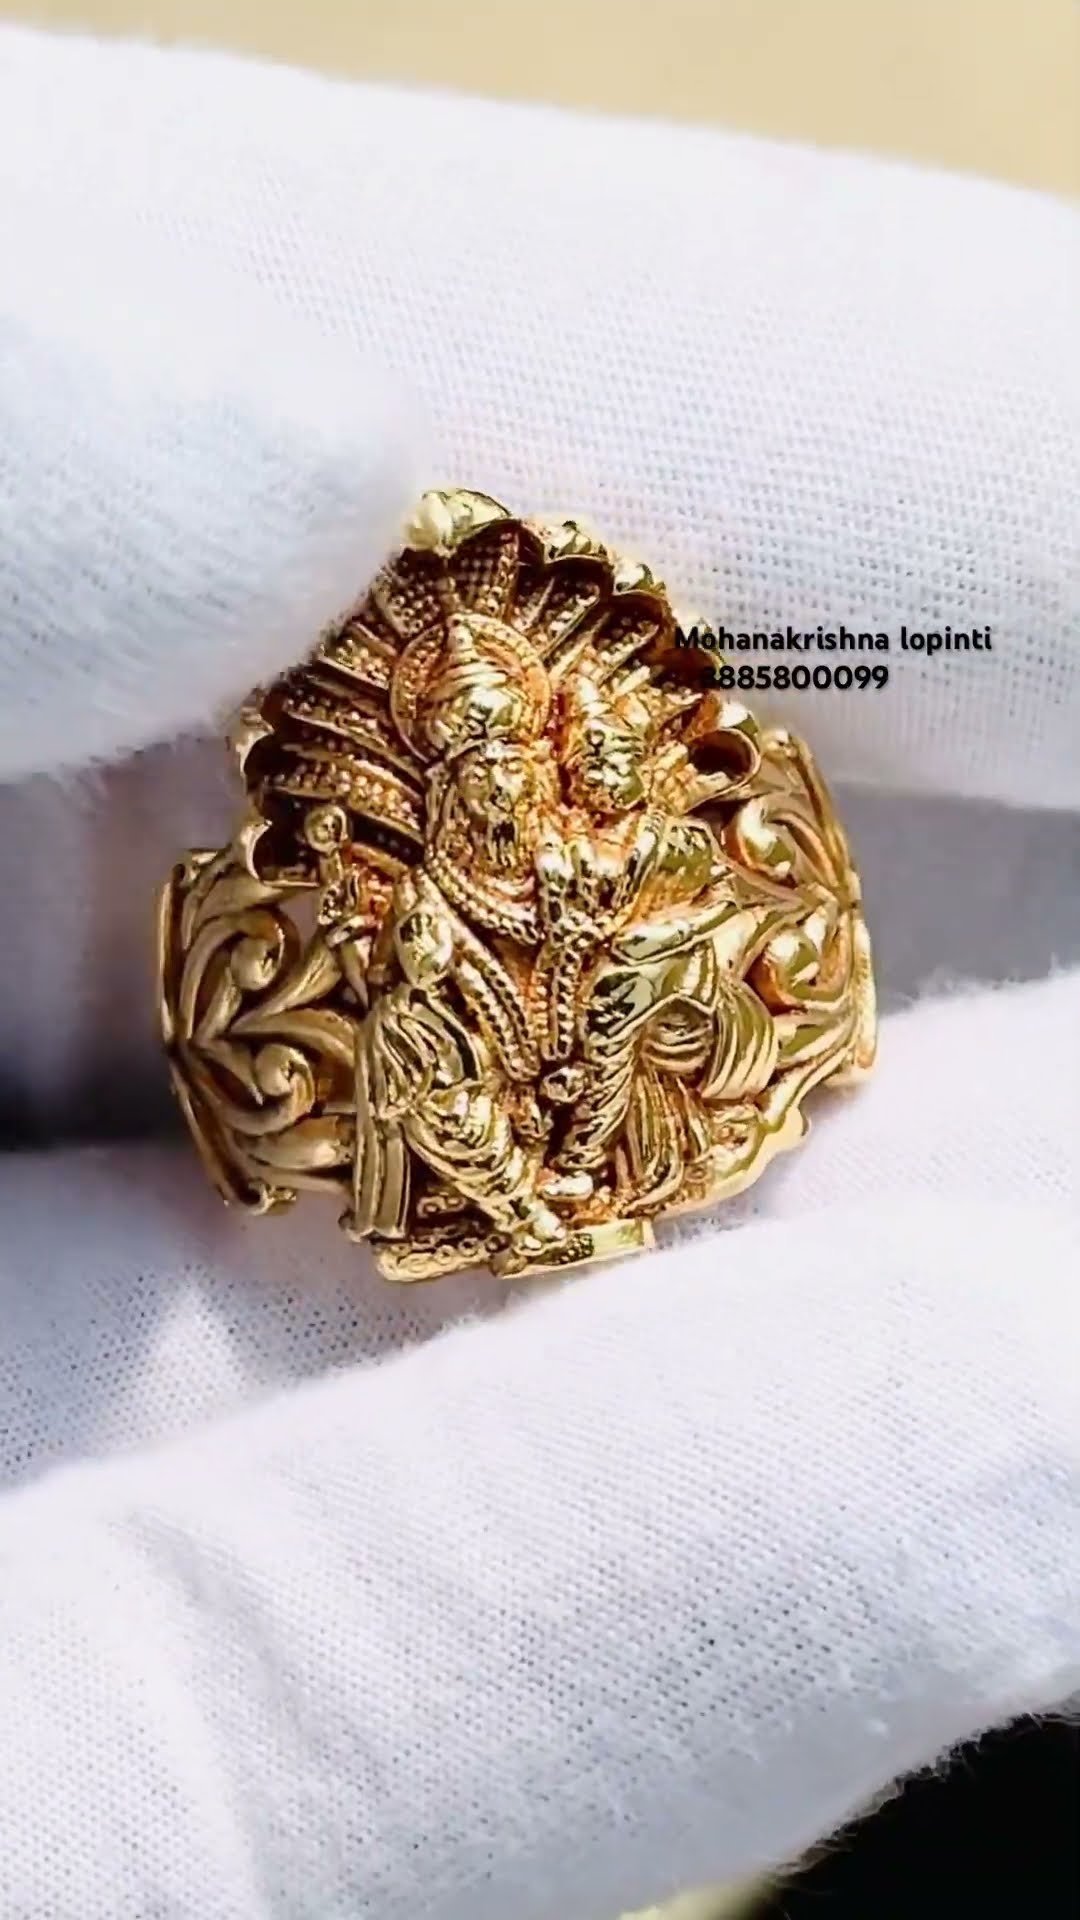 Aadhyathmika Aimpon Panchalogam Vrishabha / Vrushabh / Rishabha Rashi  (Rasi) Ring Panchaloha Taurus Zodiac Sign Ring (5 Metals Panchadhatu) –  A4811 - Srihari Puja Store